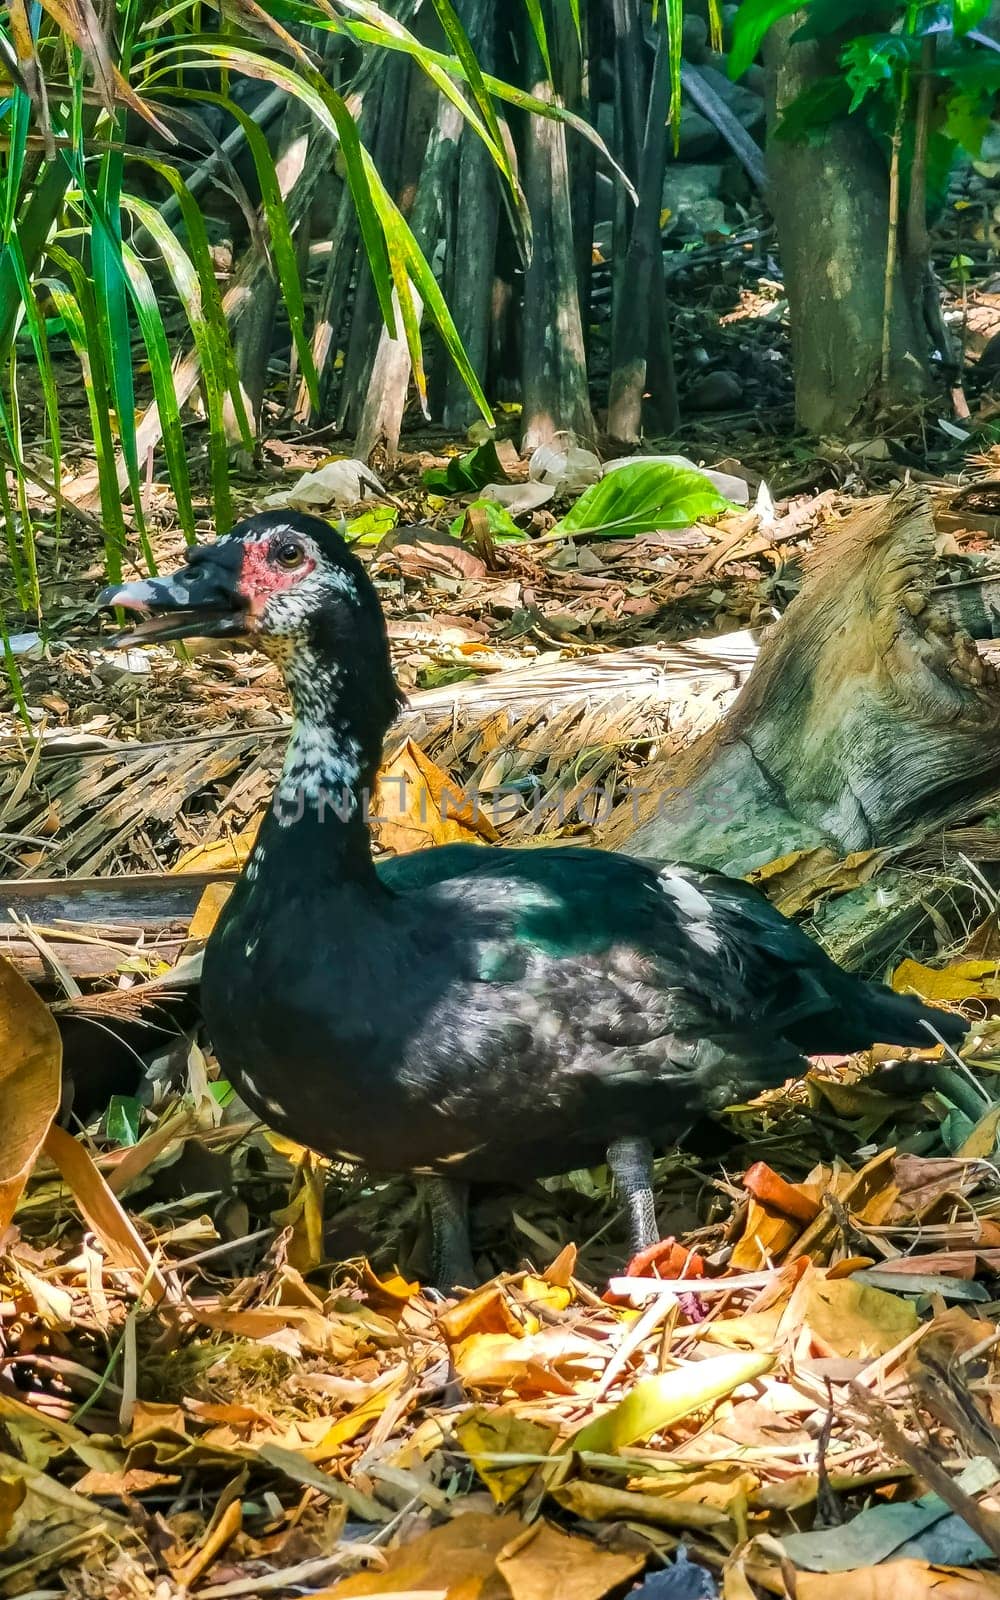 Muscovy duck in garden tropical nature in Puerto Escondido Mexico. by Arkadij